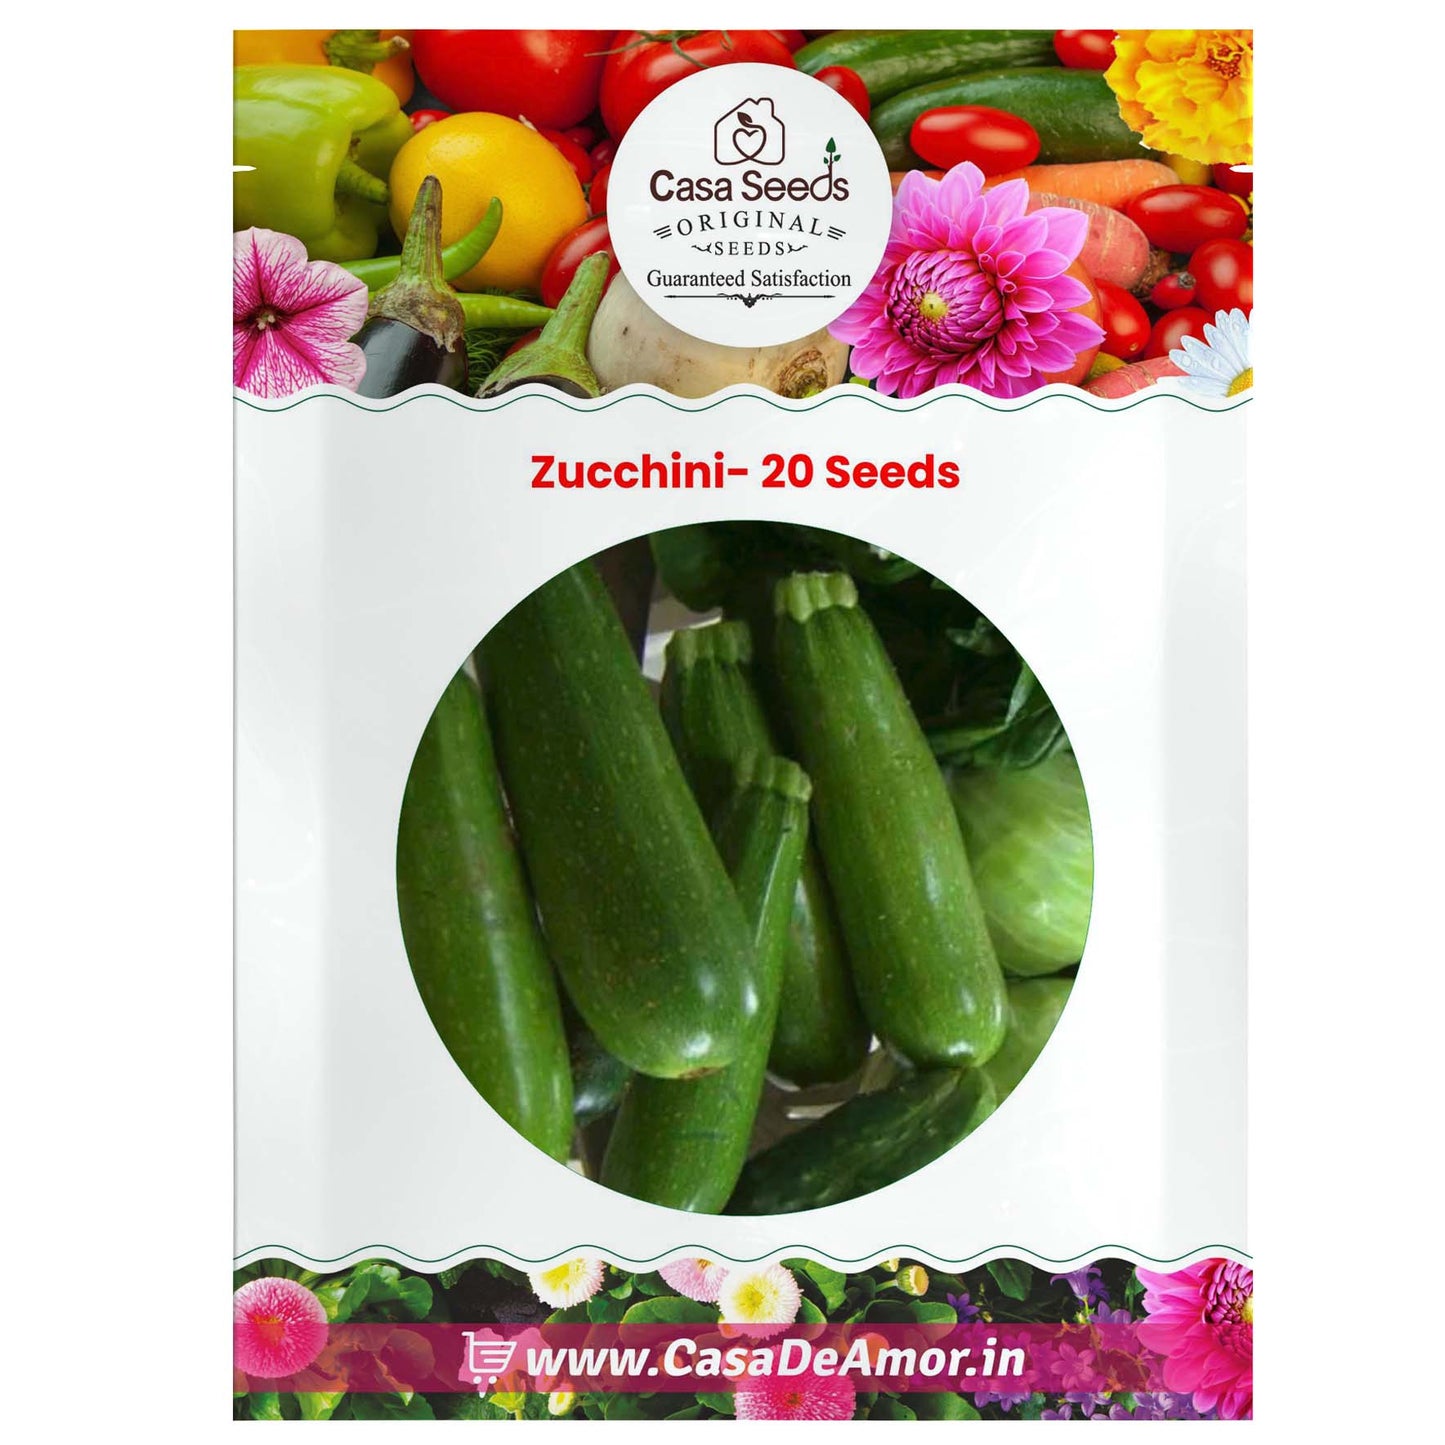 Zucchini- 20 Seeds